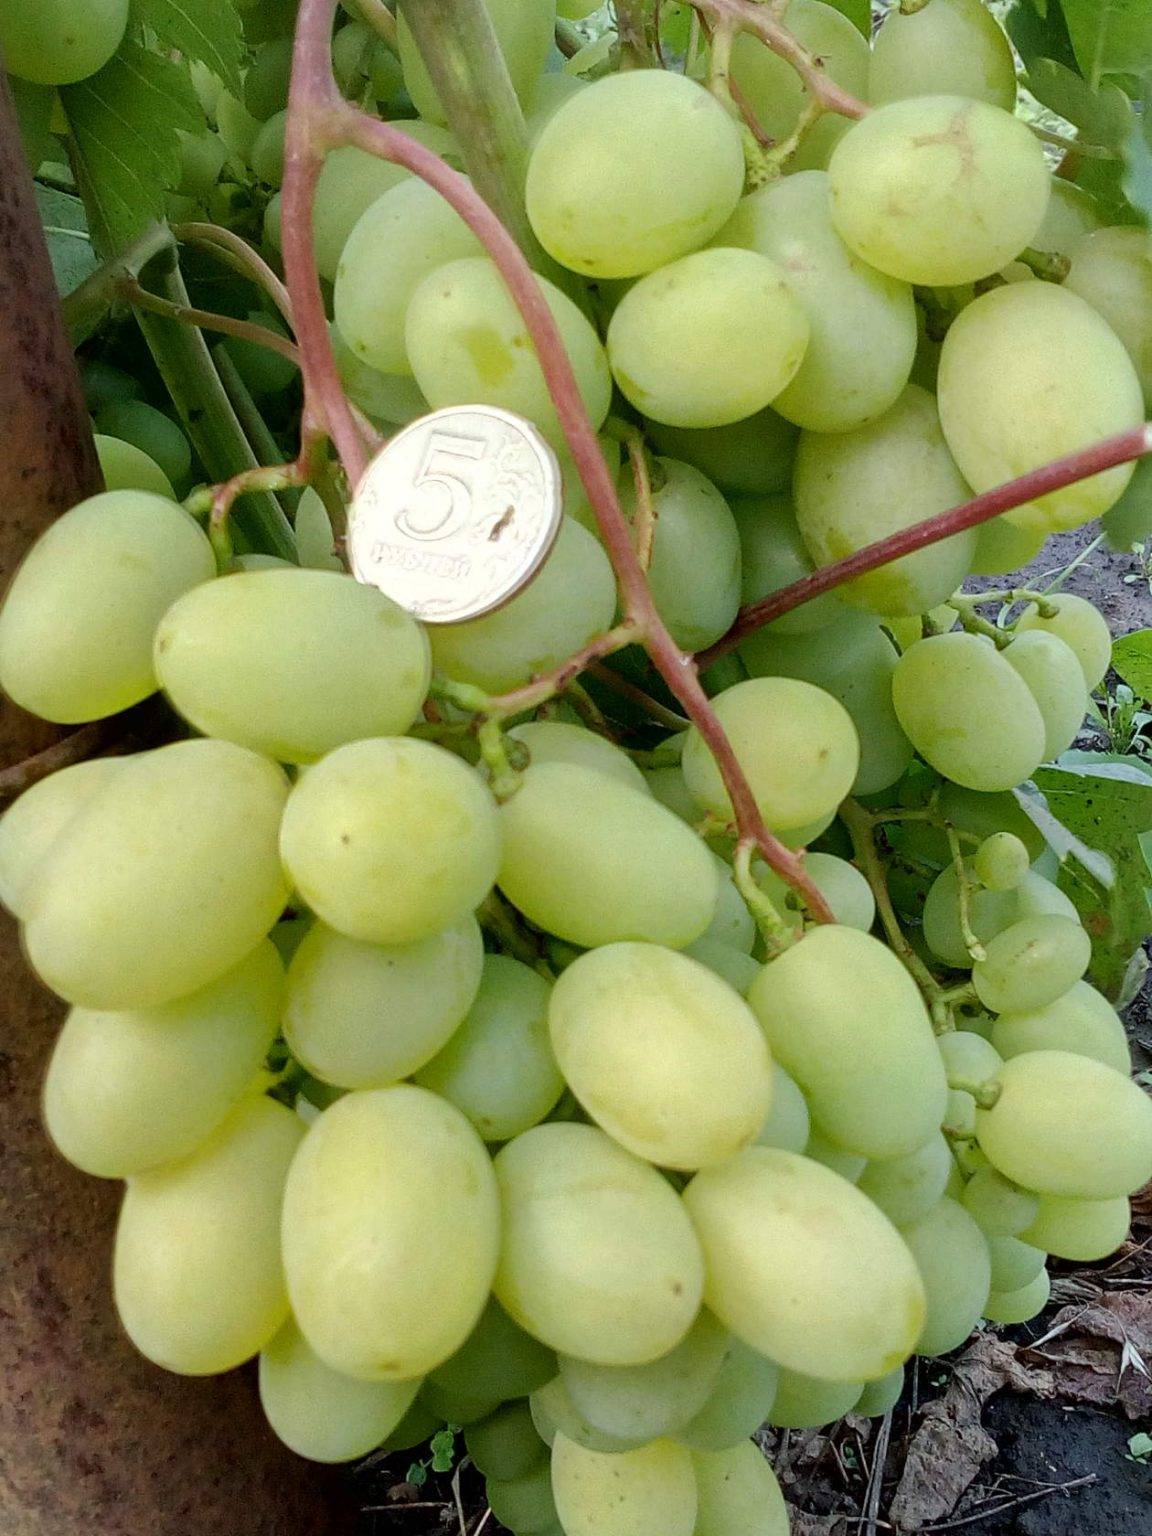 Описание винограда сорта Галахад, правила посадки и ухода